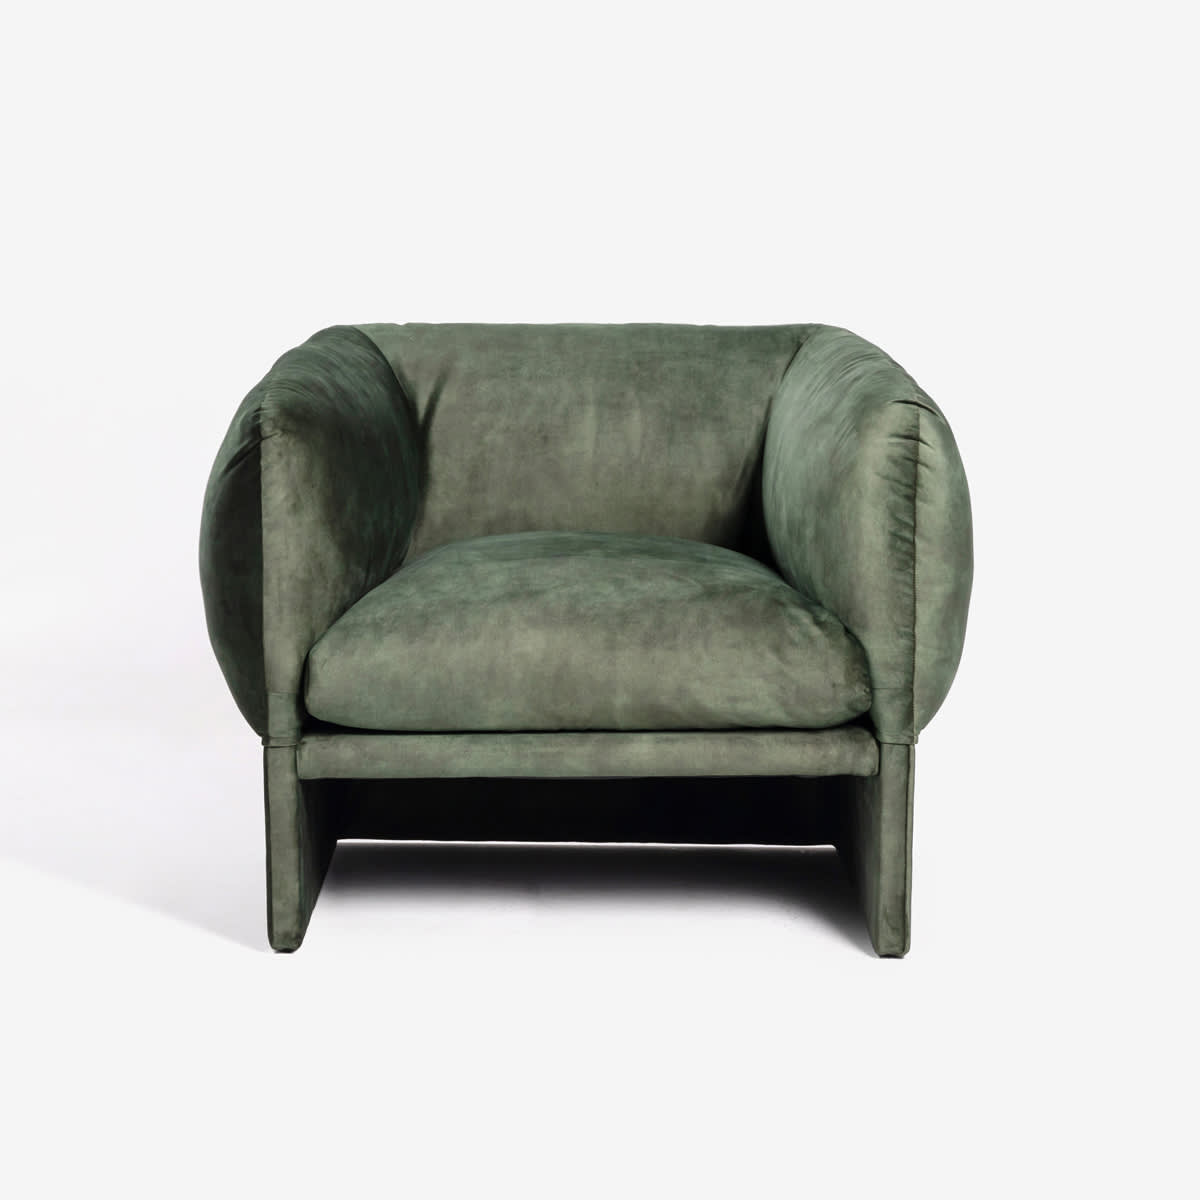 Tulip Lounge Chair - Forest Velvet Decent 29 - Front View by Grado